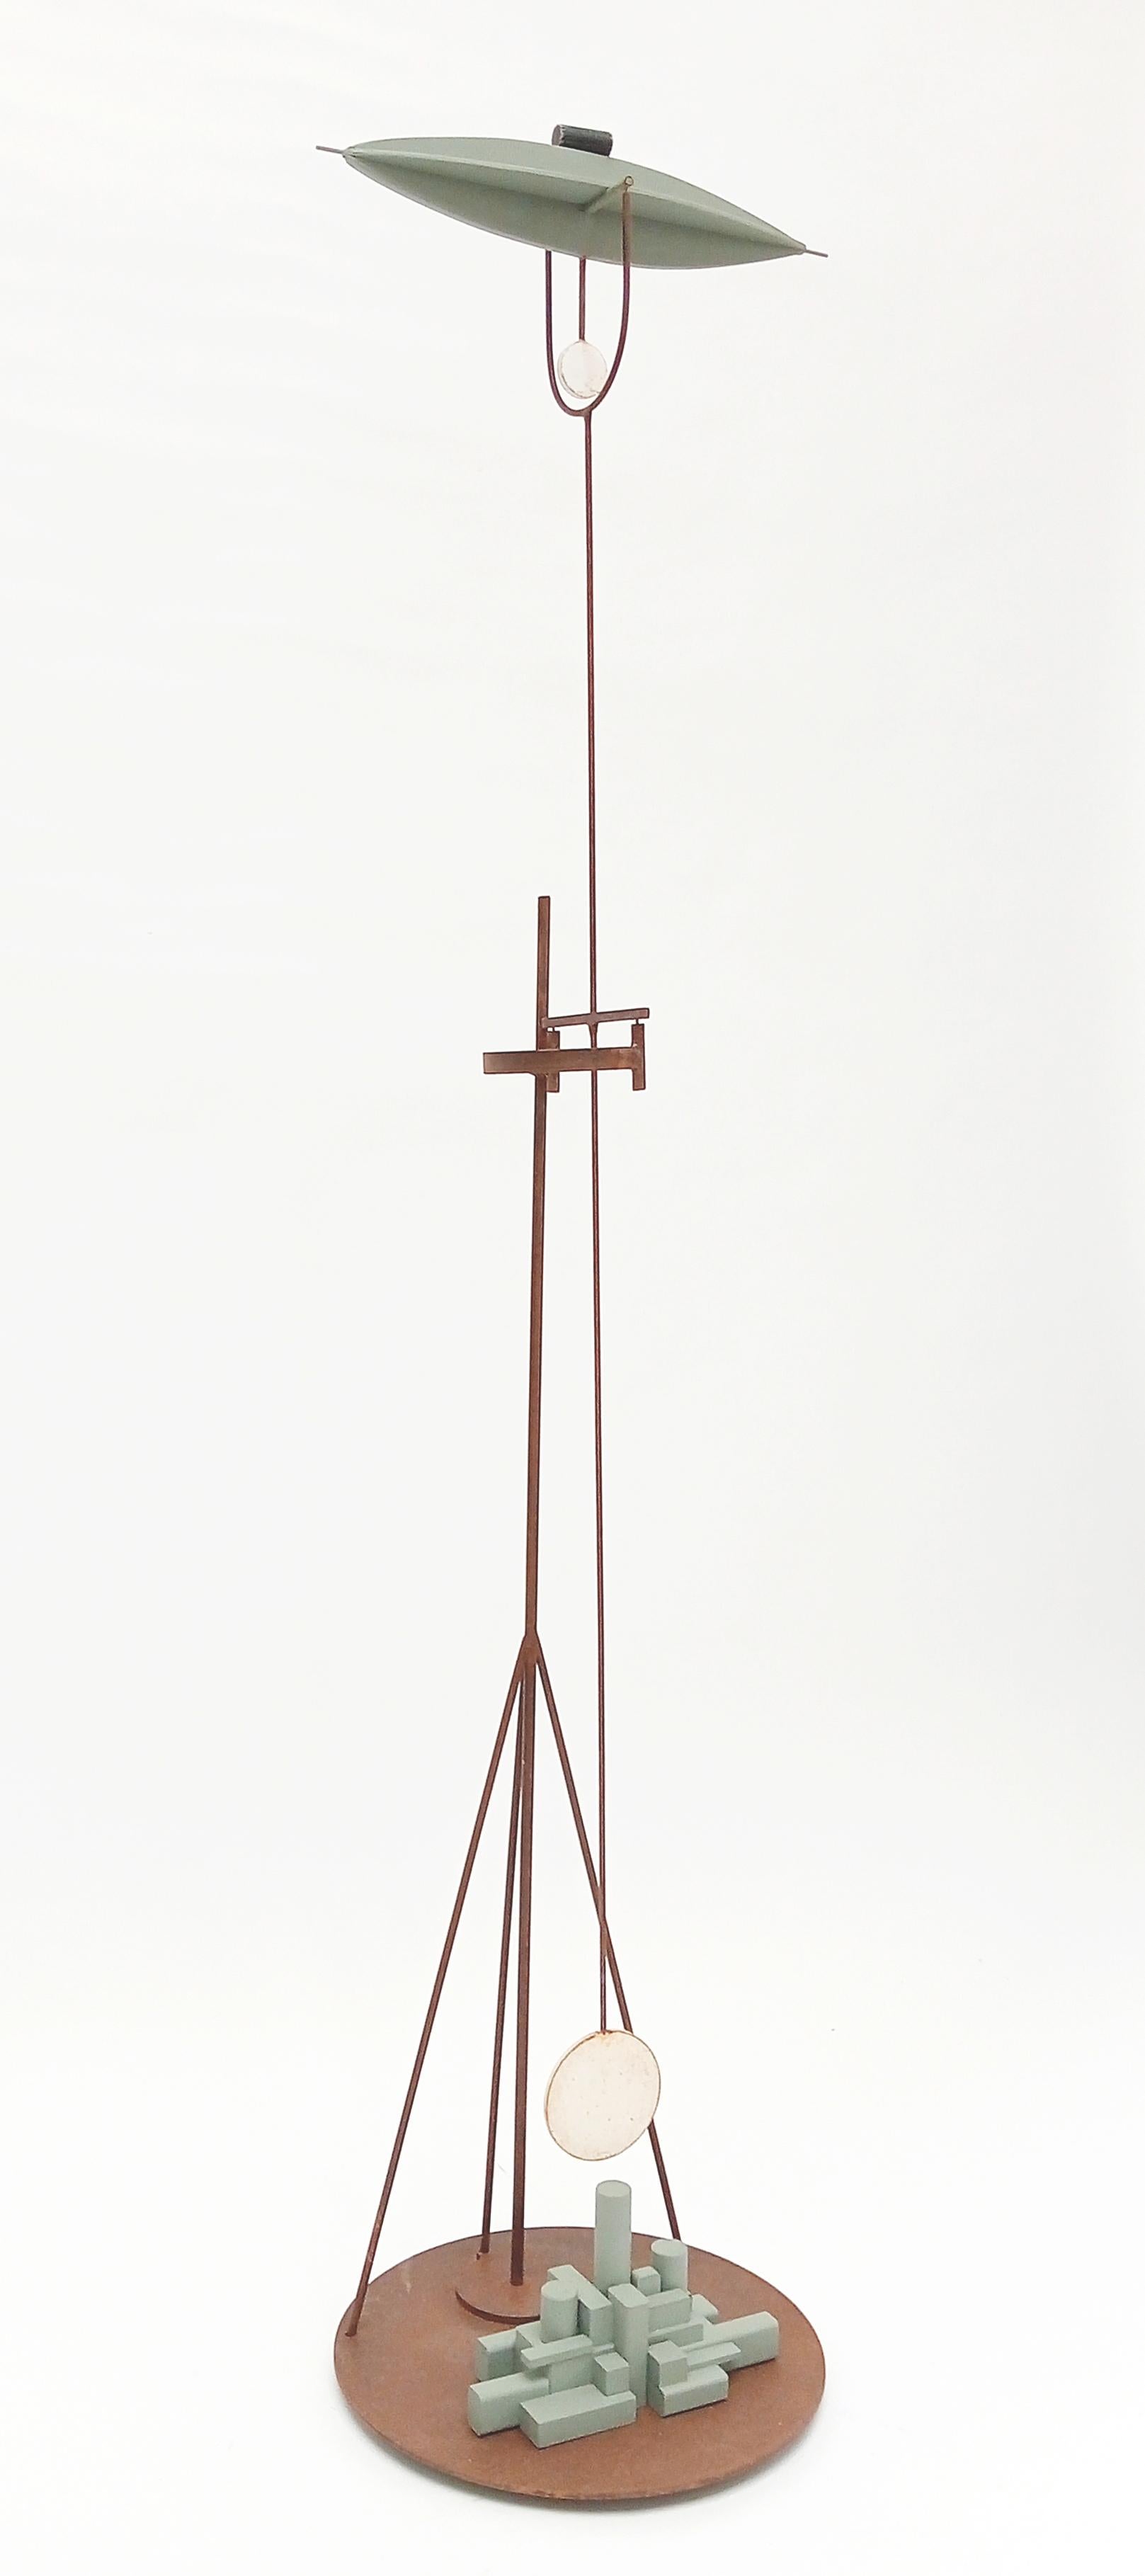 Pep Fajardo Abstract Sculpture - Chronos. Architect's Pendulum Ship